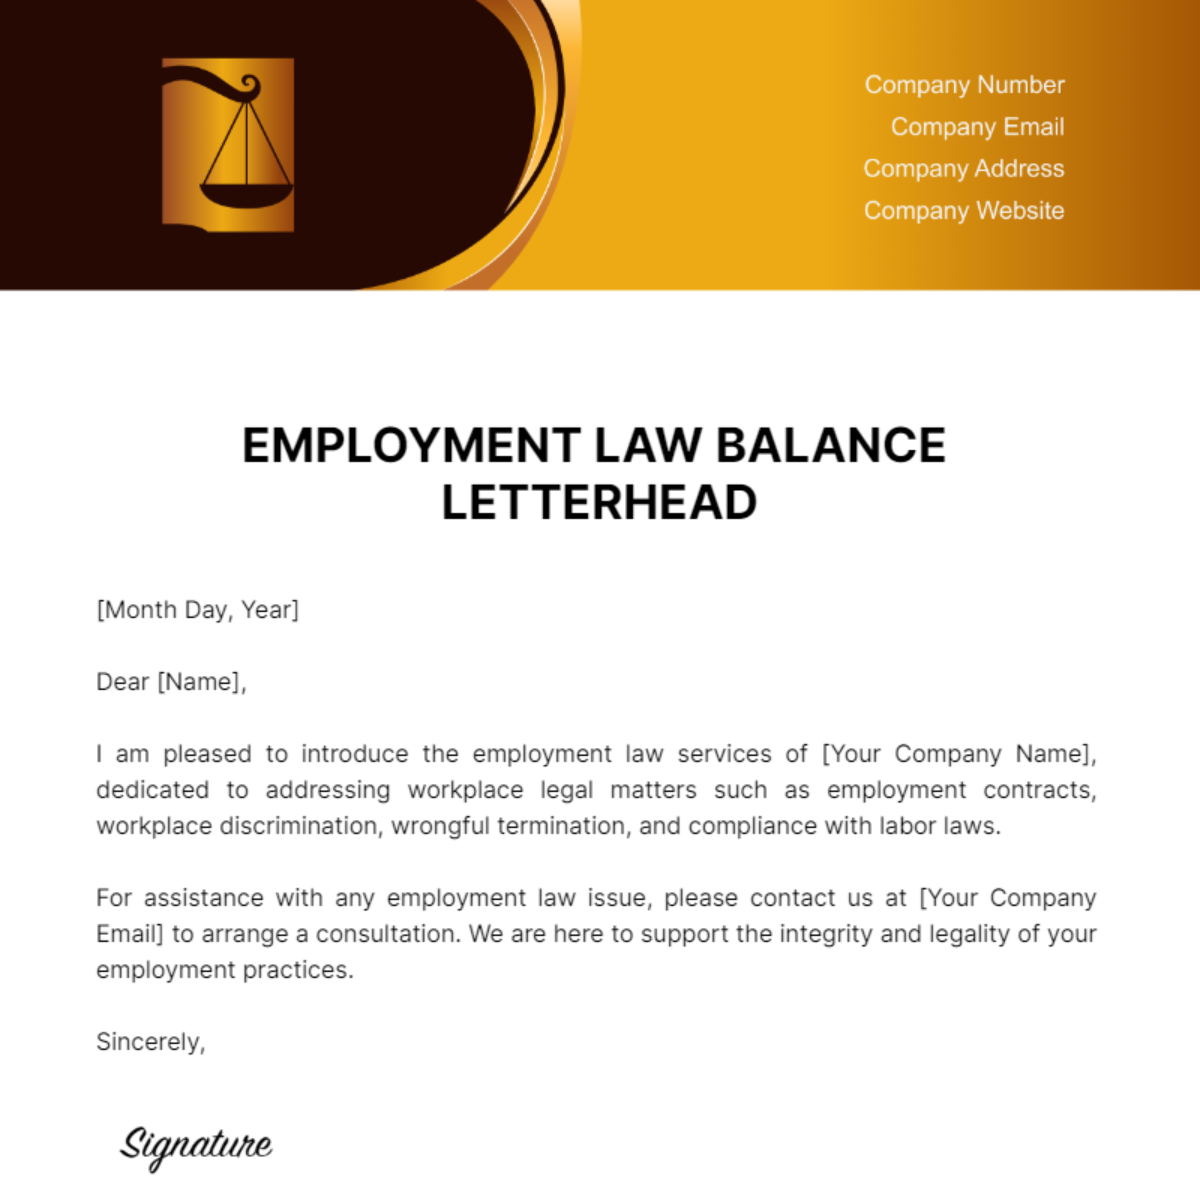 Employment Law Balance Letterhead Template